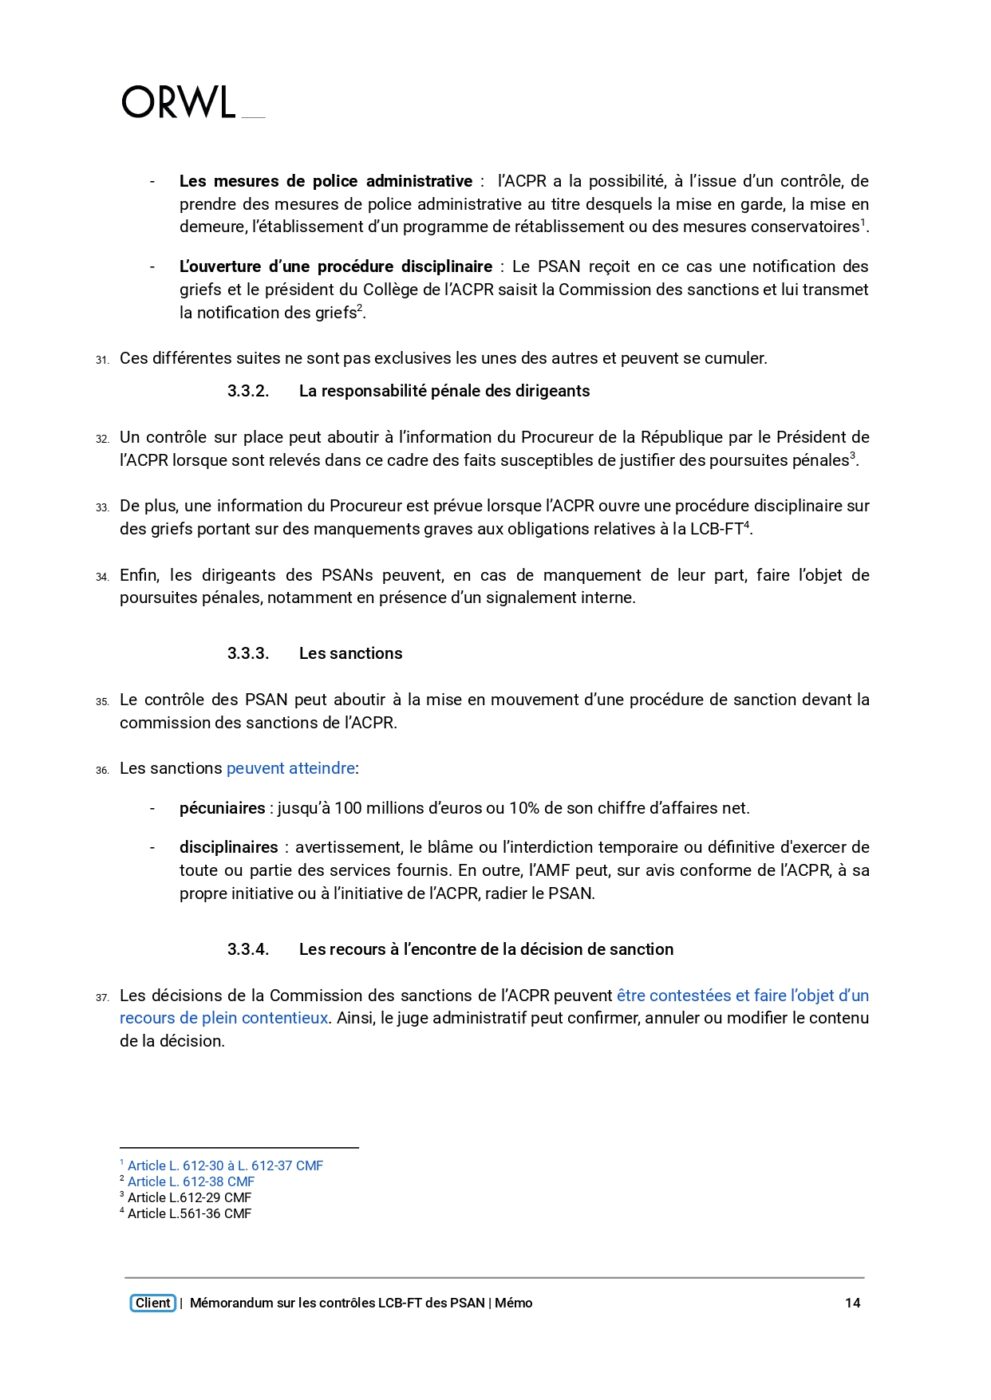 202402_Memorandum_Controle LCB-FT (ORWL) page 14